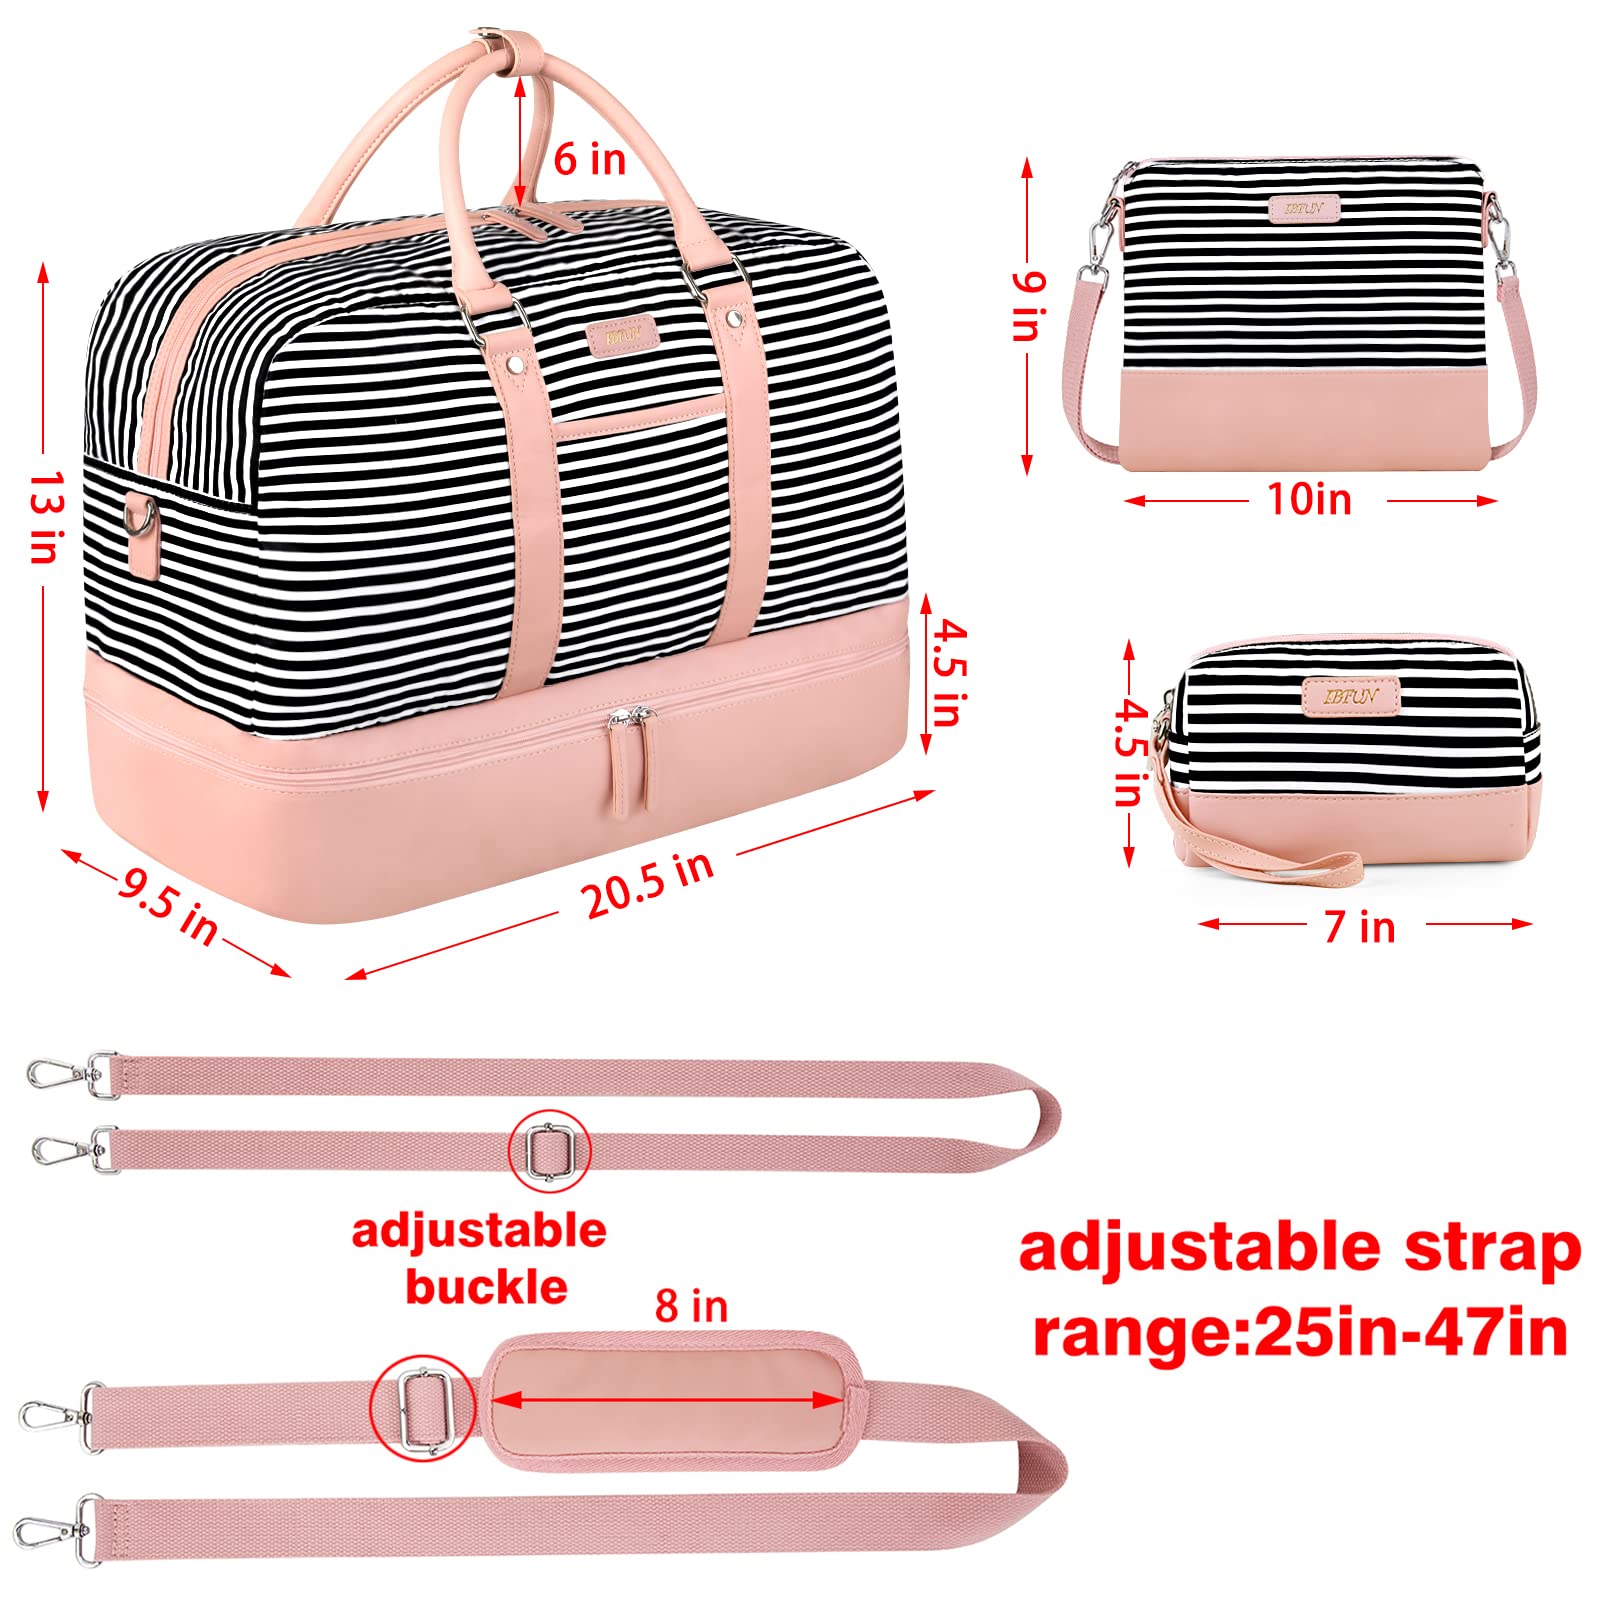 XB 20 inches Weekender Duffle Bag Large Travel Duffel Luggage Bag  Waterproof with Top Handle for Women Men 